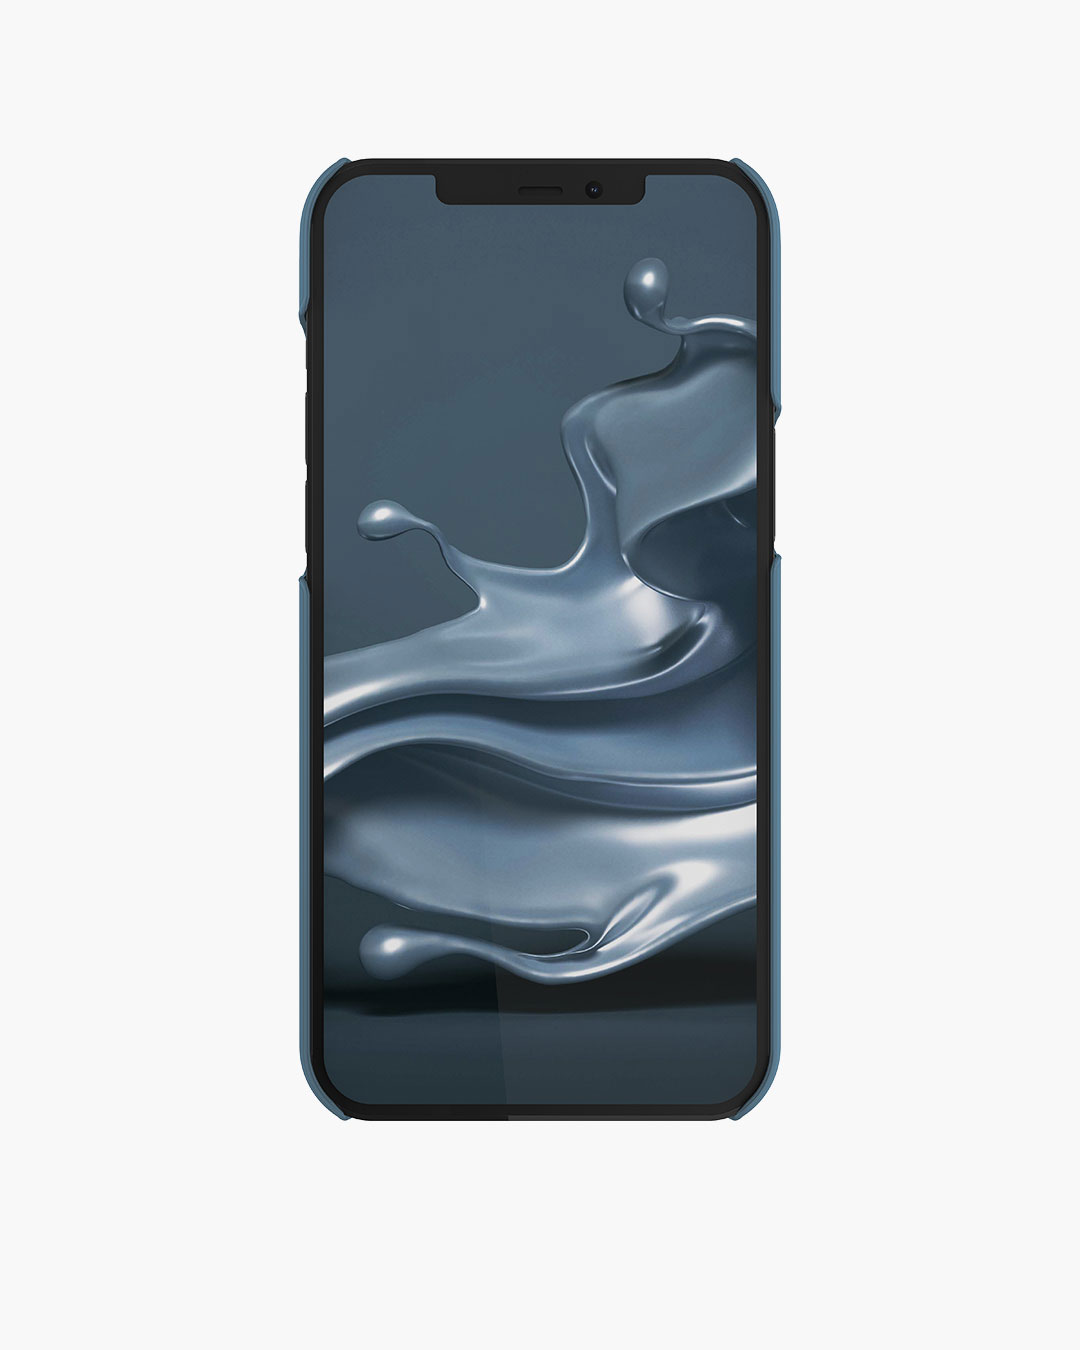 Fresh 'n Rebel - Phone Case iPhone 12 Pro Max - Dive Blue